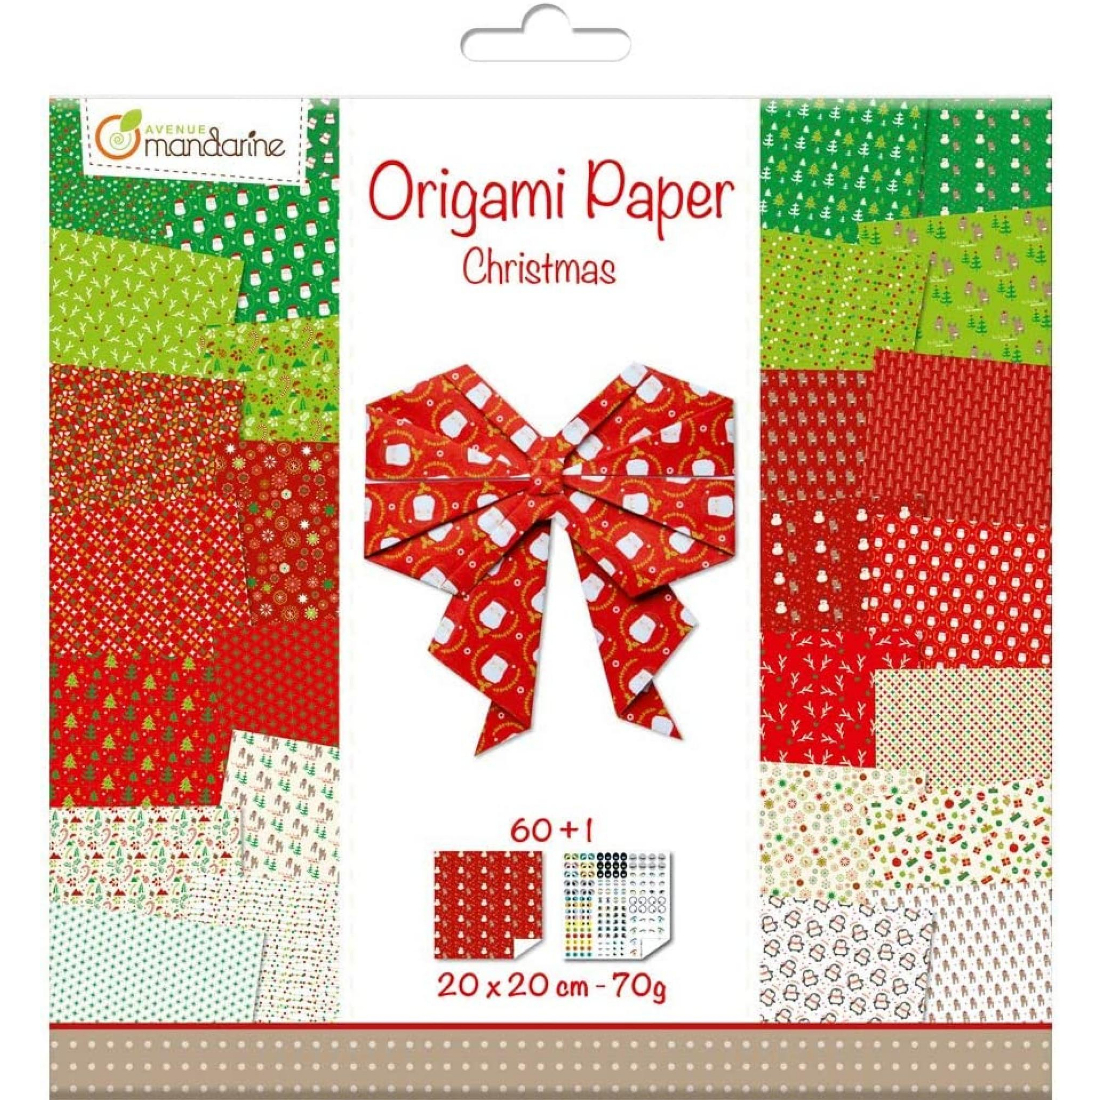 Papel Origami Christmas avenue mandarine